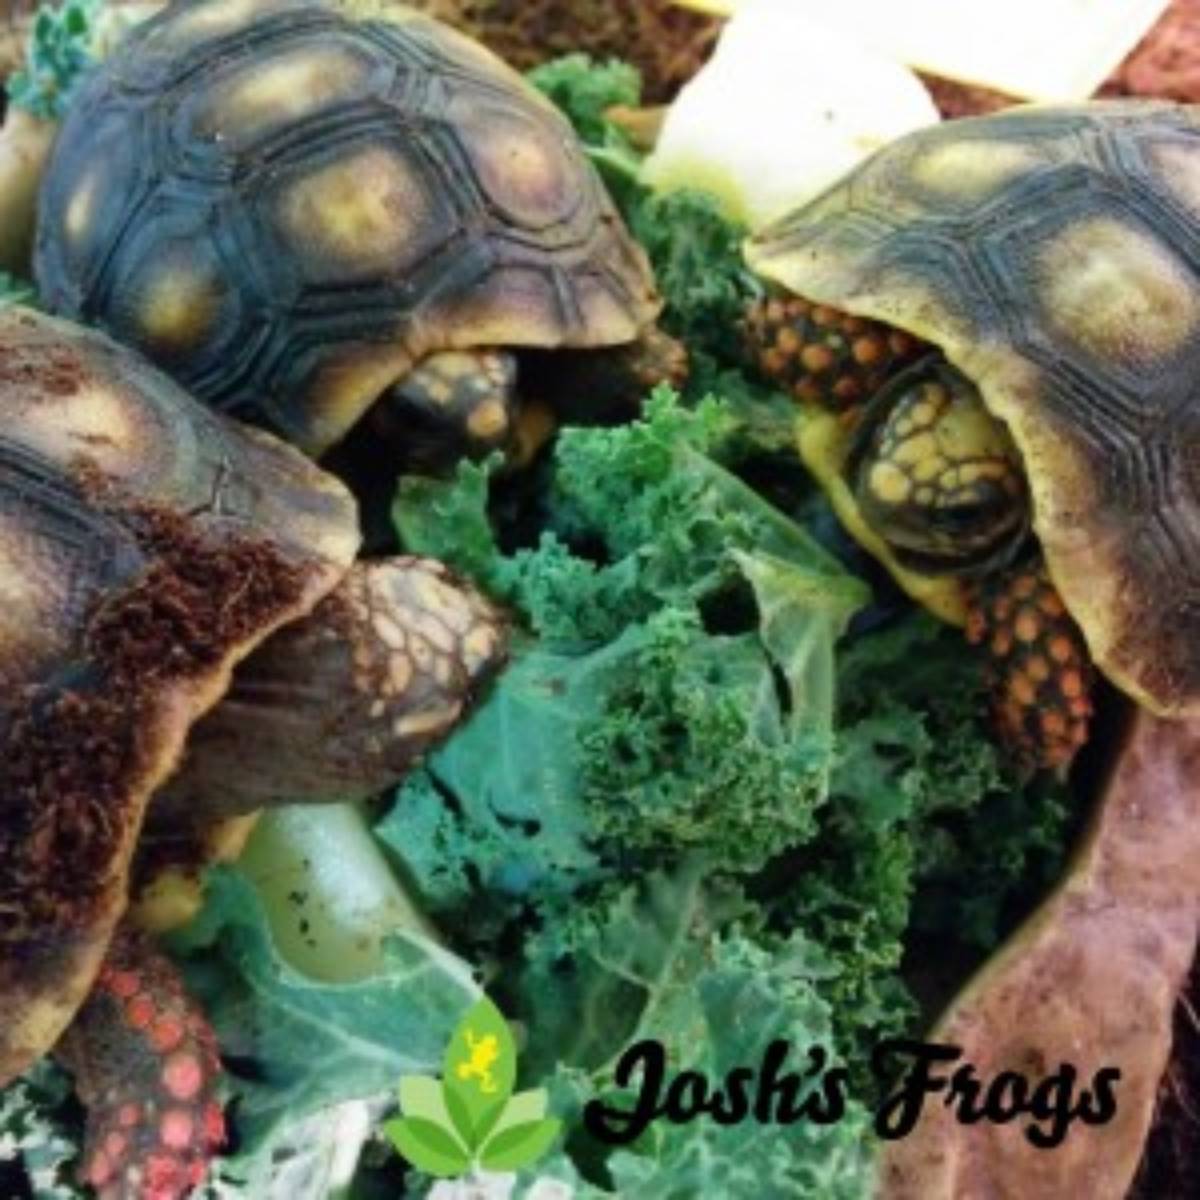 Josh's frogs red foot tortoise babies eating greens